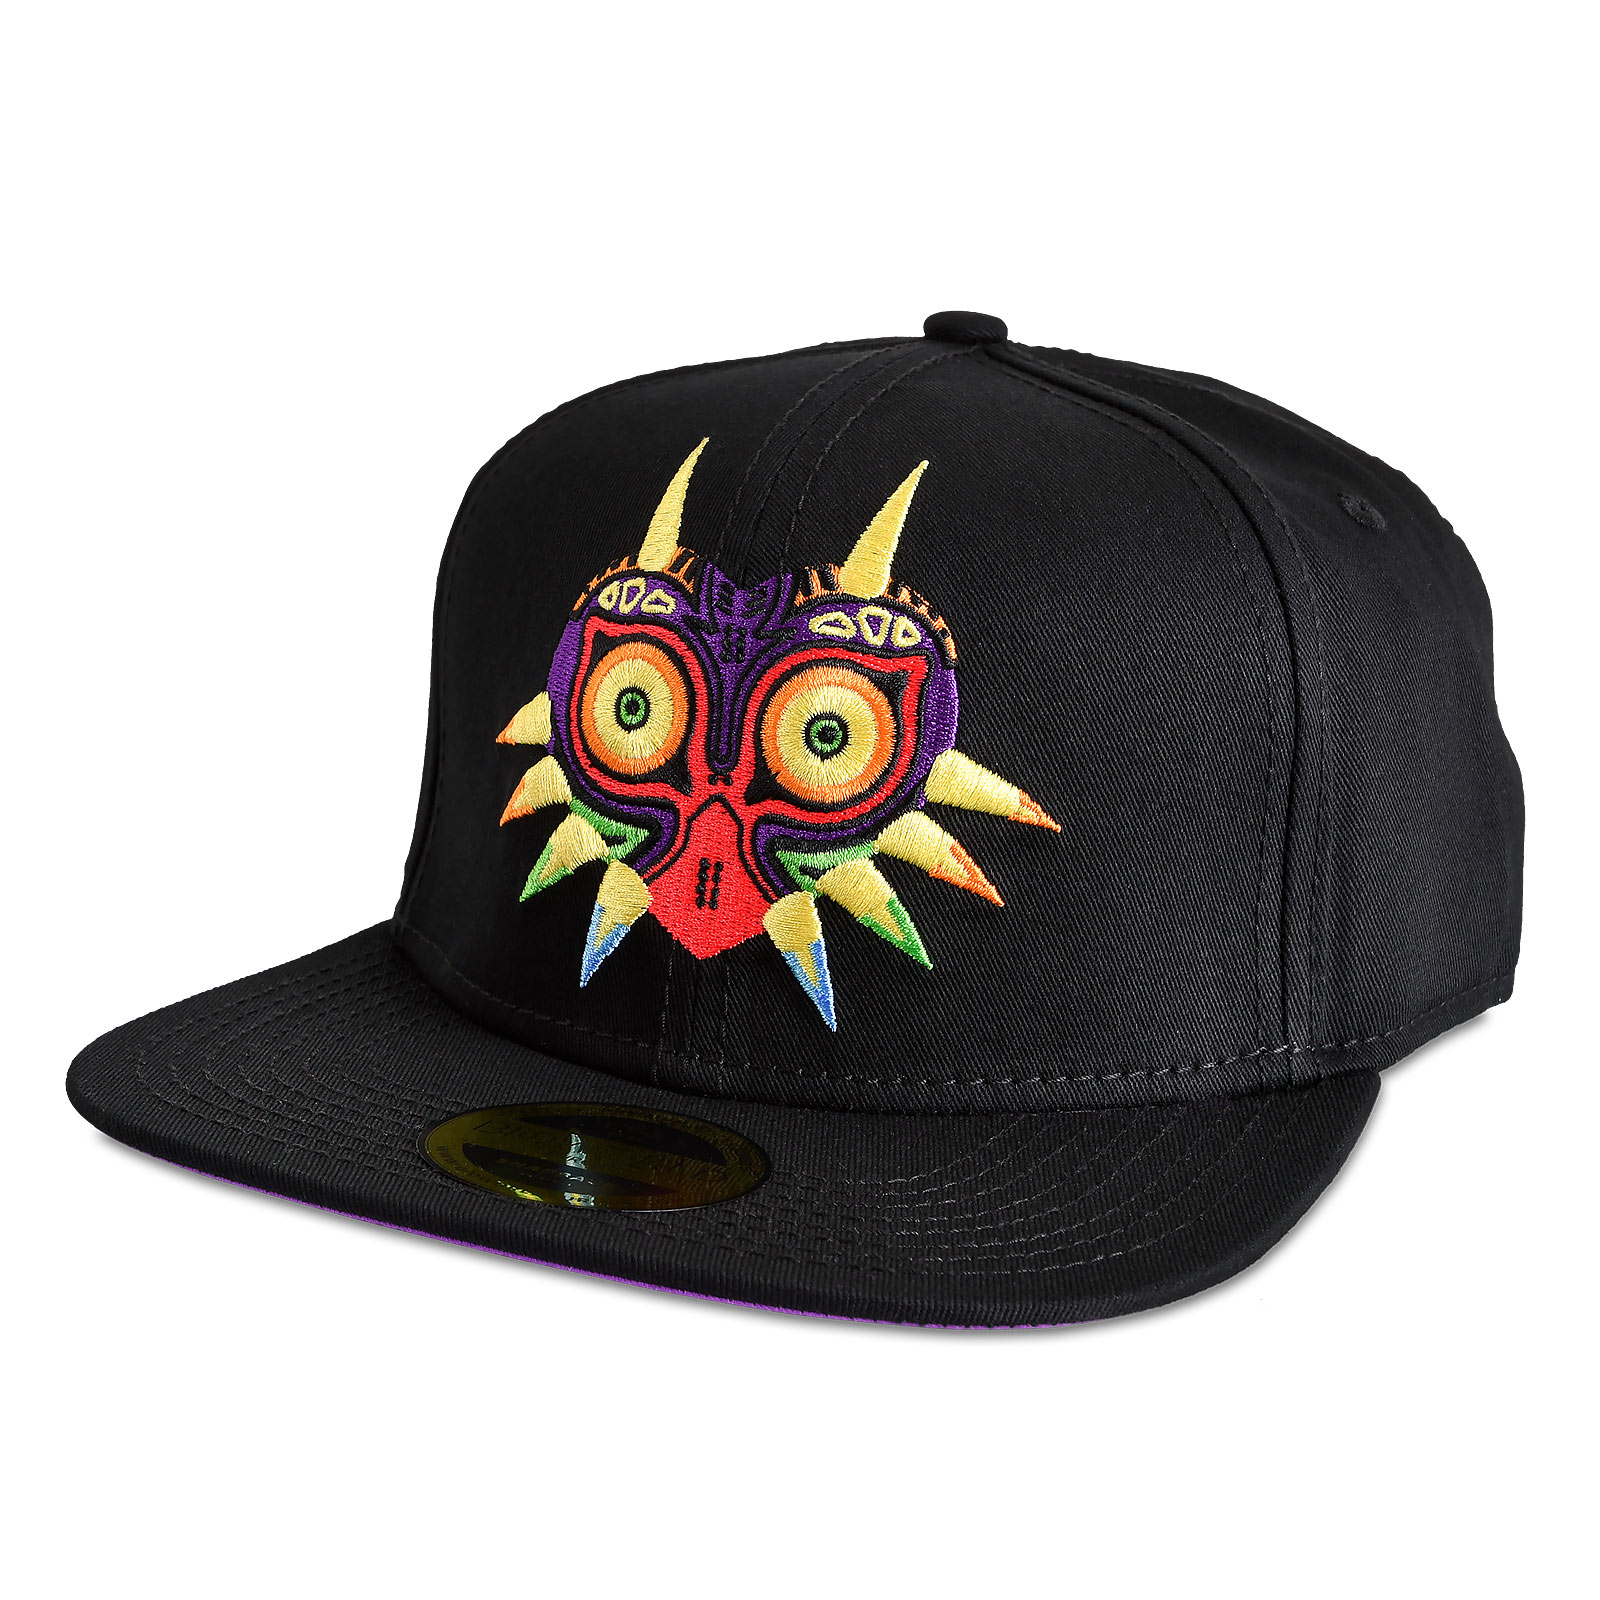 Zelda - Majoras Mask Snapback Cap